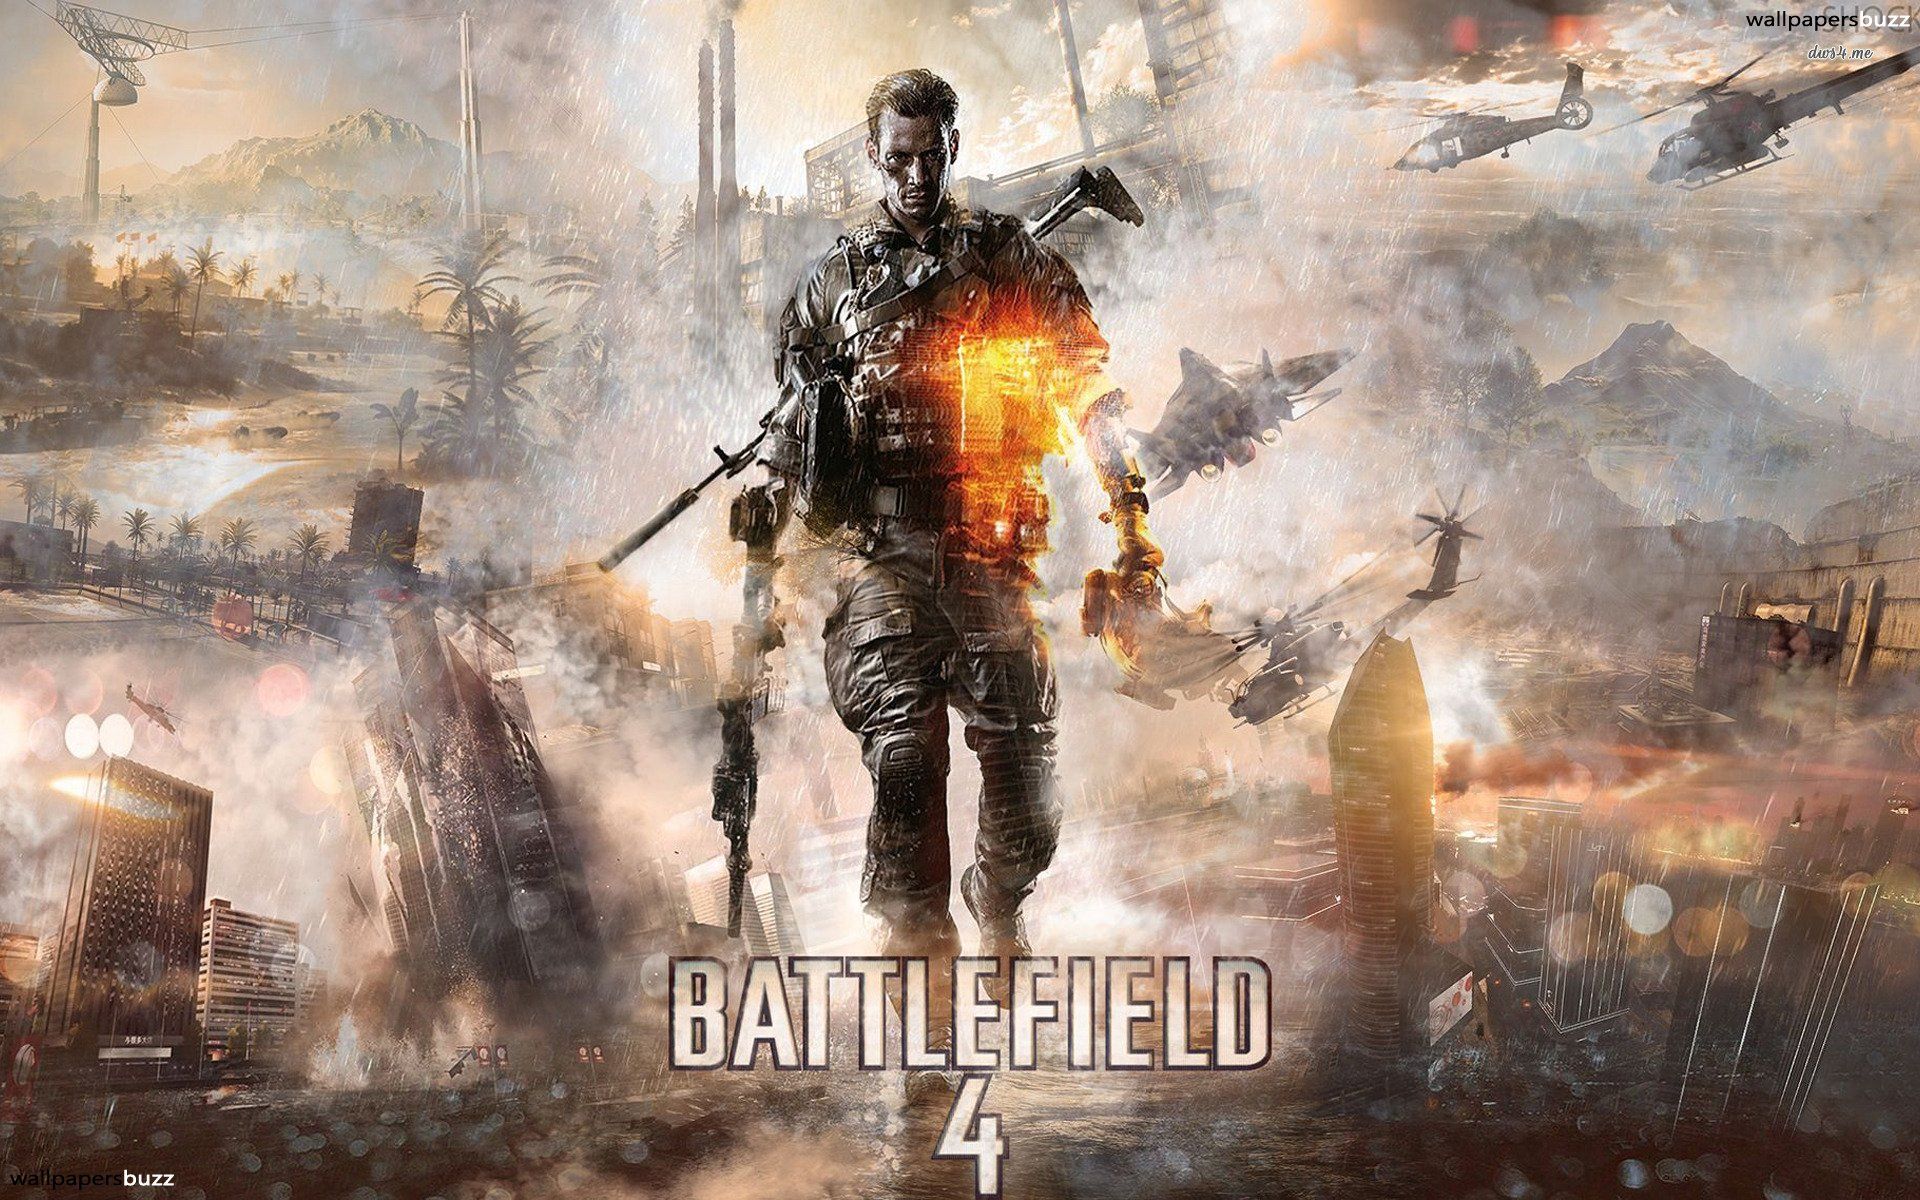 Battlefield V Wallpaper 4K, PlayStation 4, Xbox One, PC Games